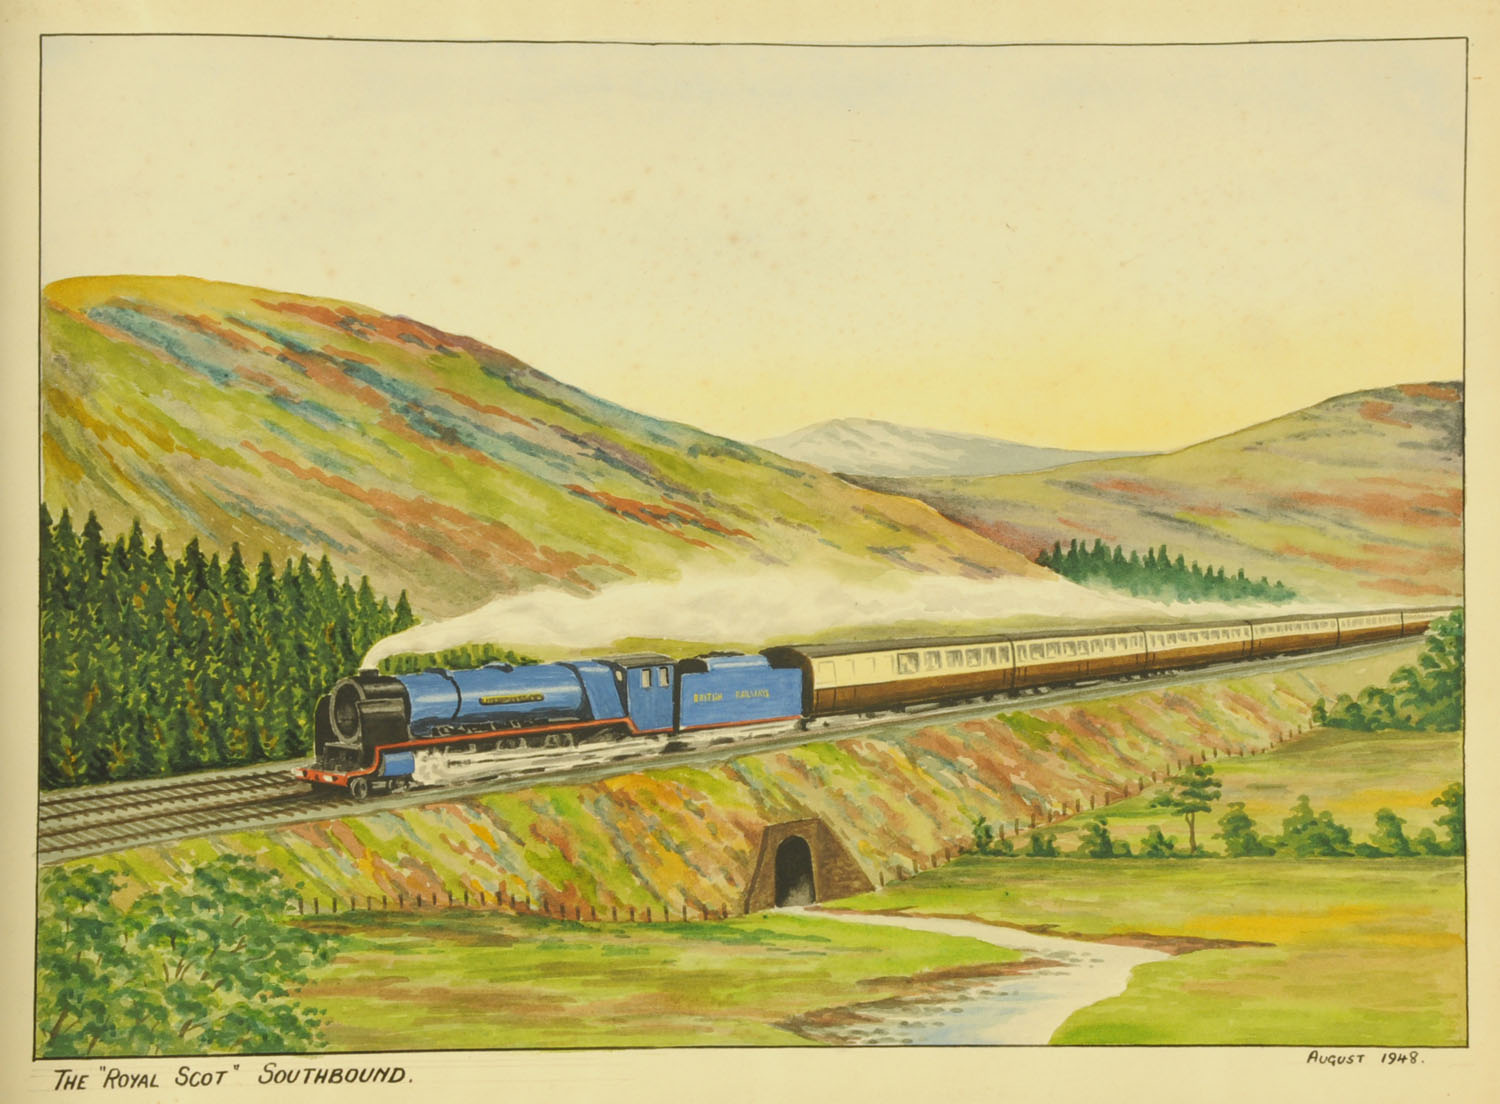 Scotland by Allan Furniss 1942, portfolio album of watercolour sketches, - Image 5 of 19